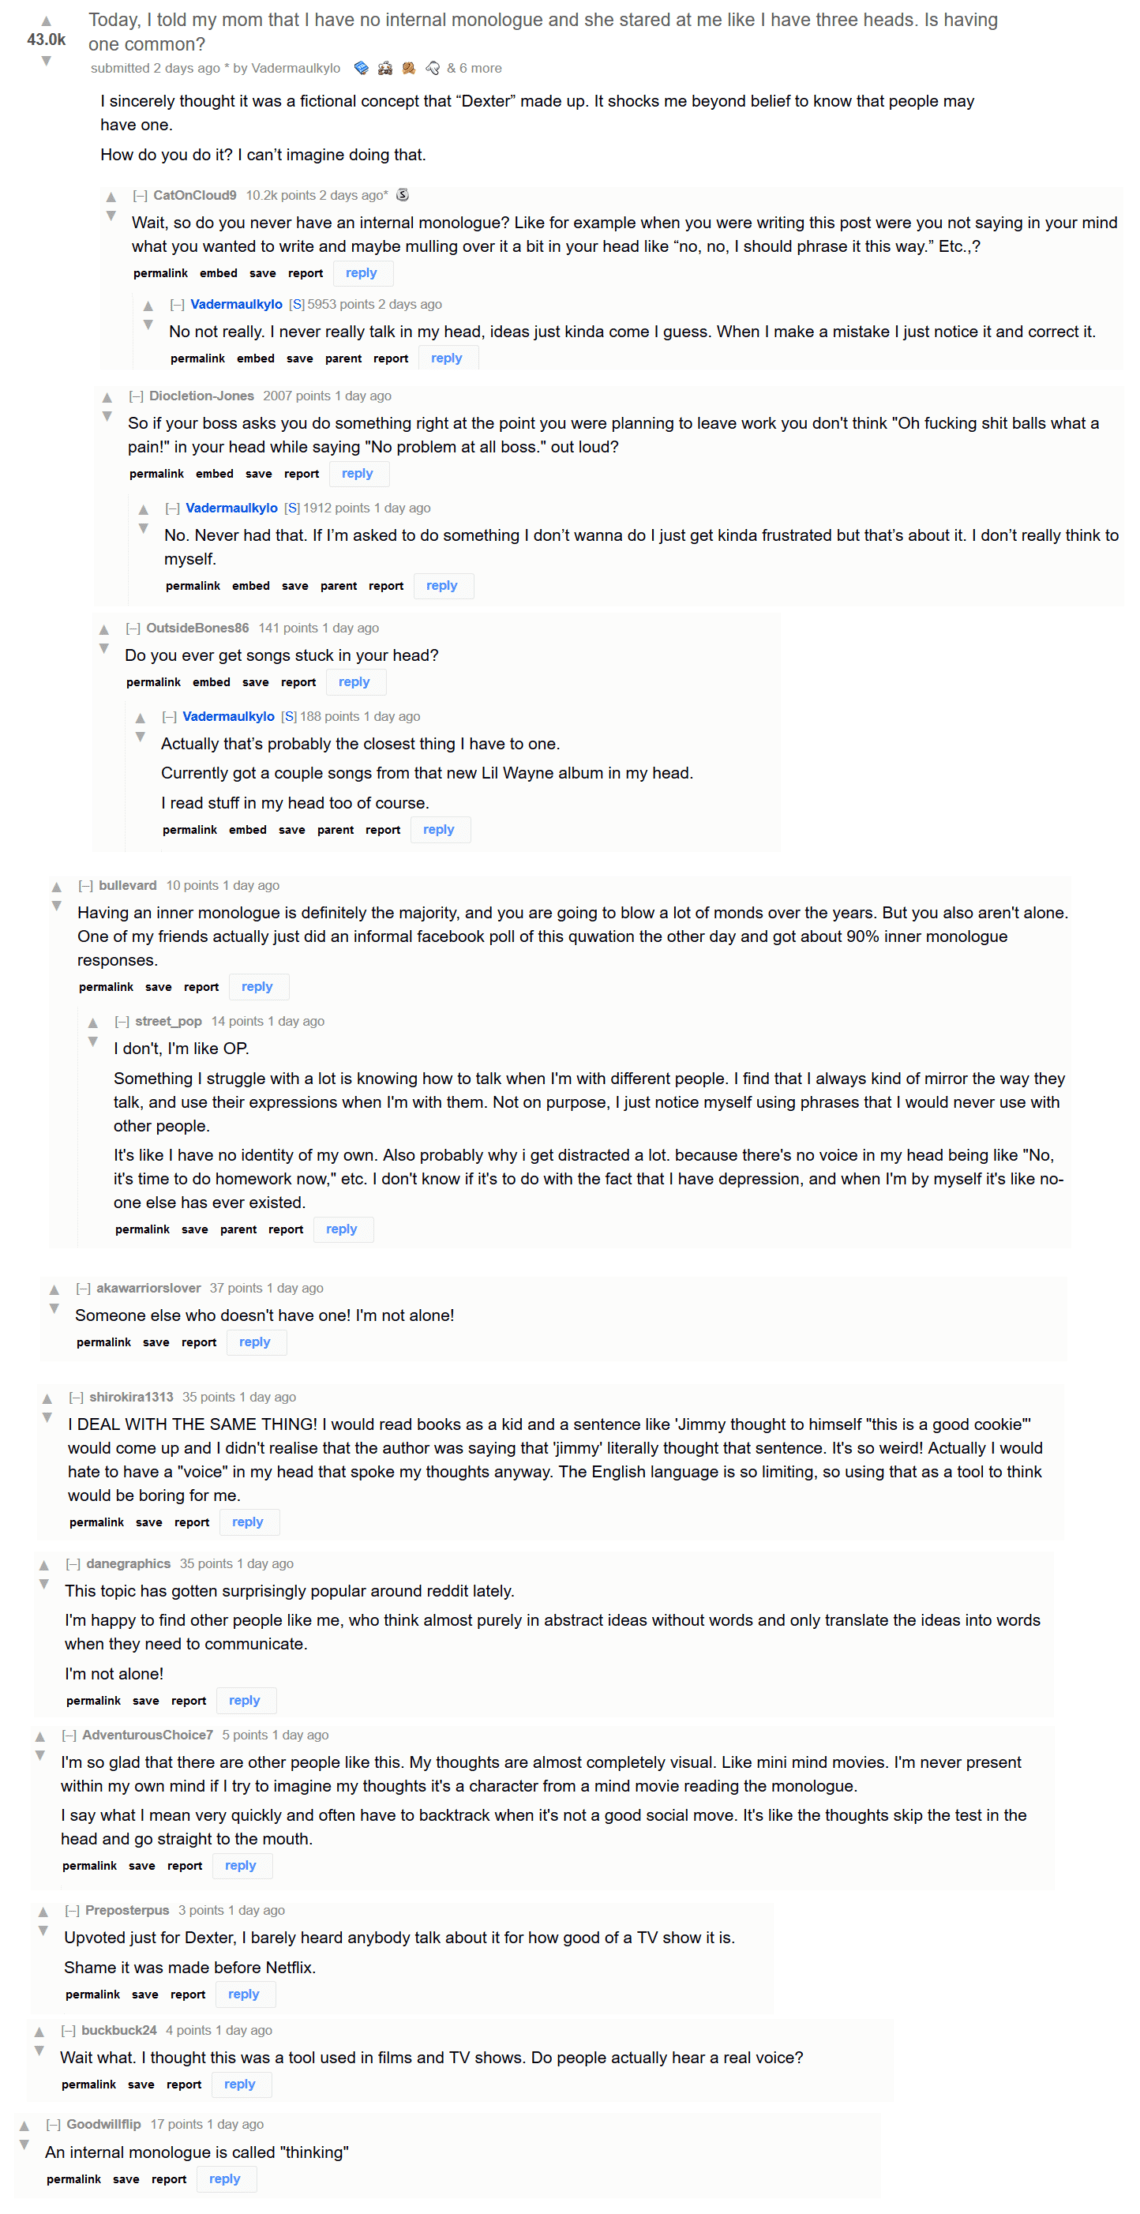 Redditors admit to having no internal monologue.